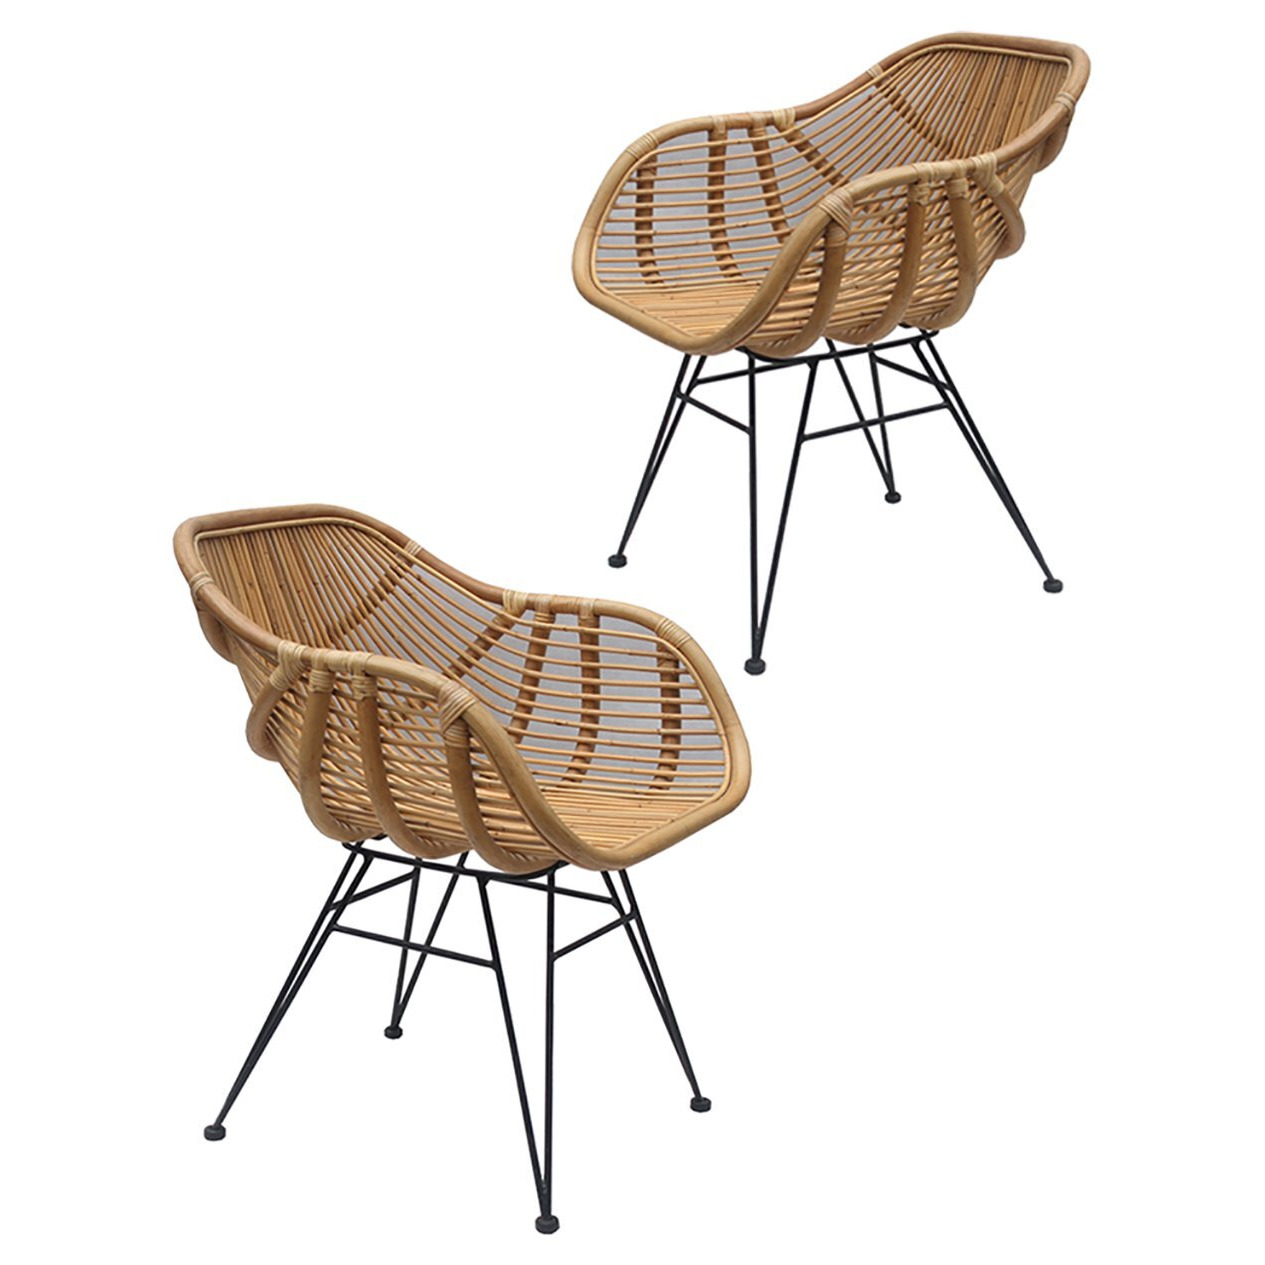 SBN Bodan Pair of Metal Dining Chairs - Light Wood - image 1